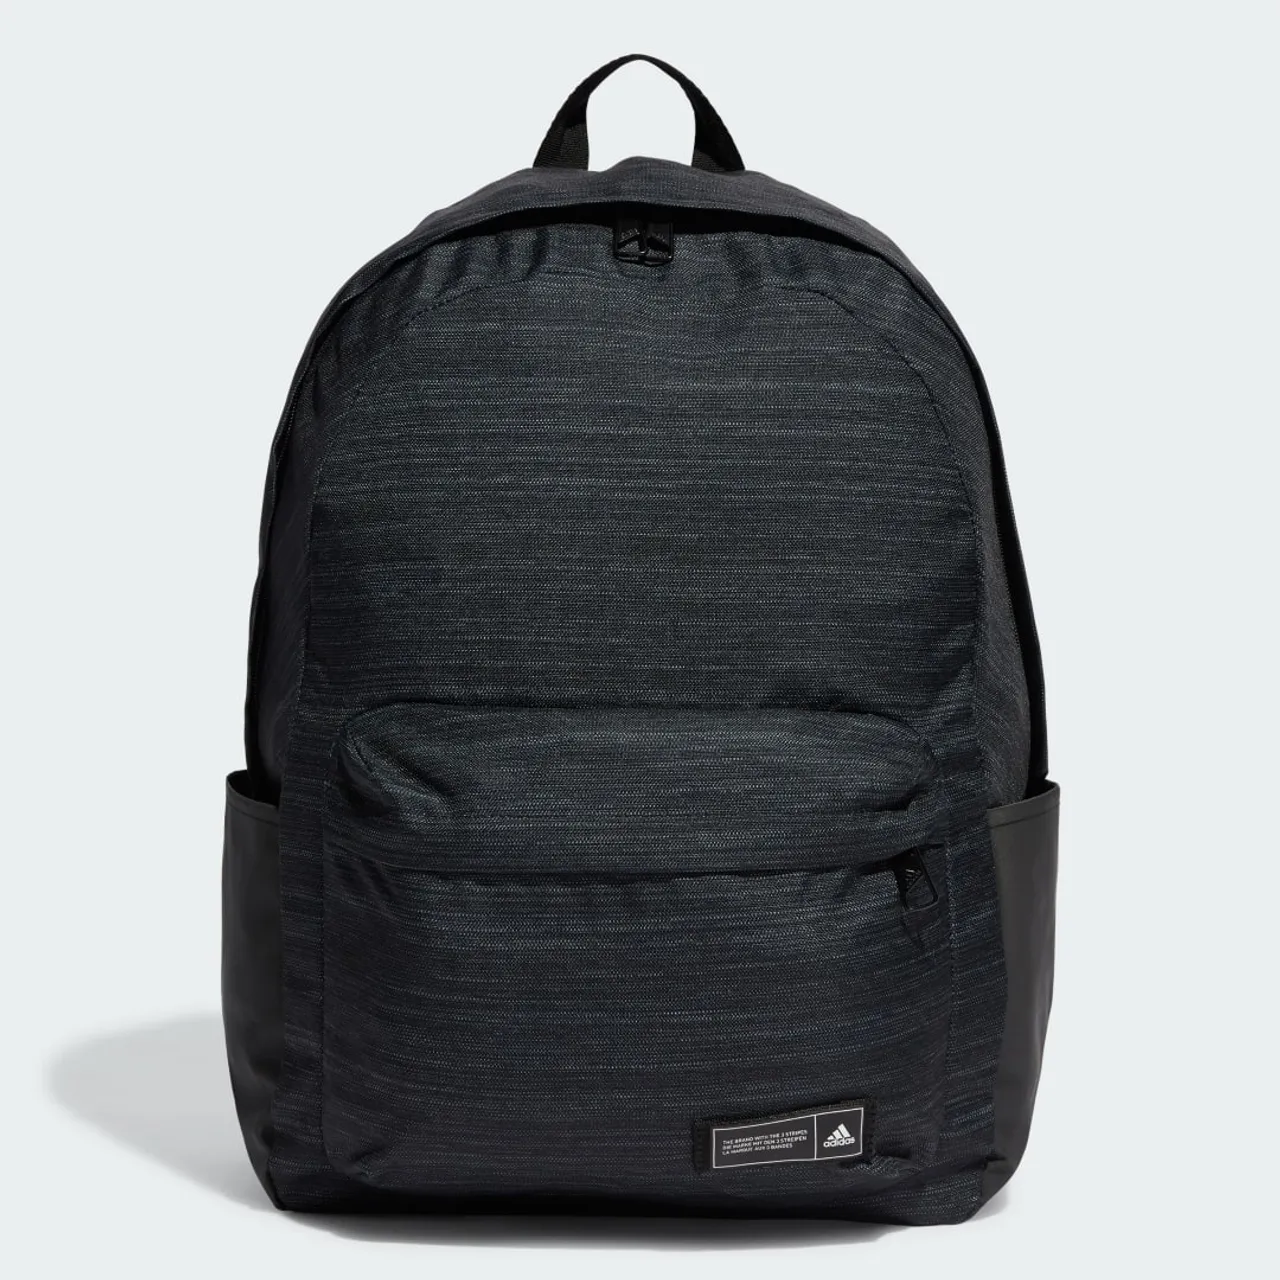 Classic ATT1 Backpack